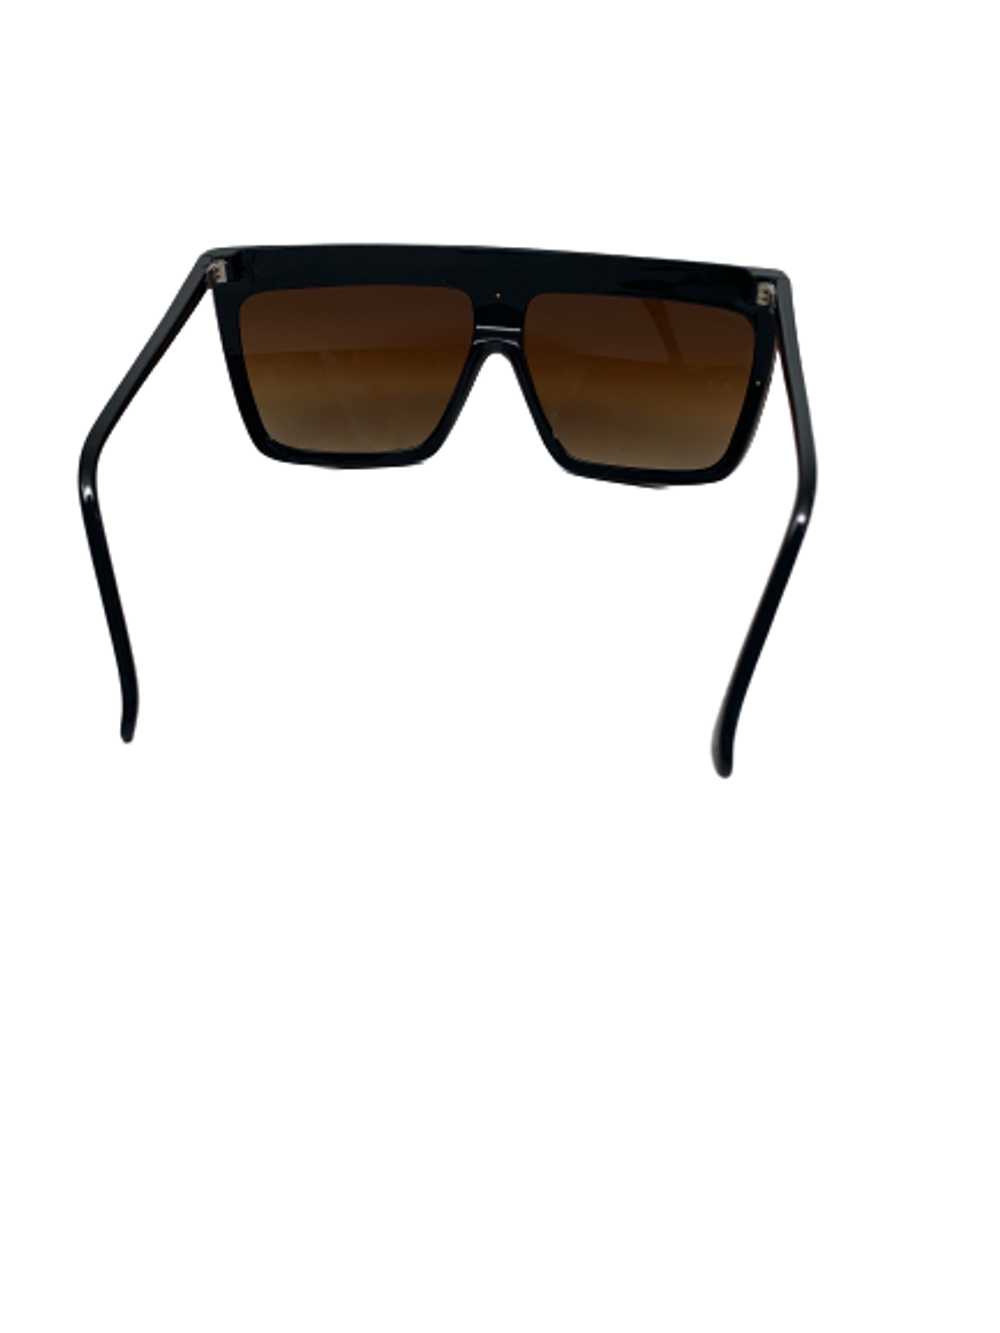 1980s Shield Lens Sunglasses - image 3